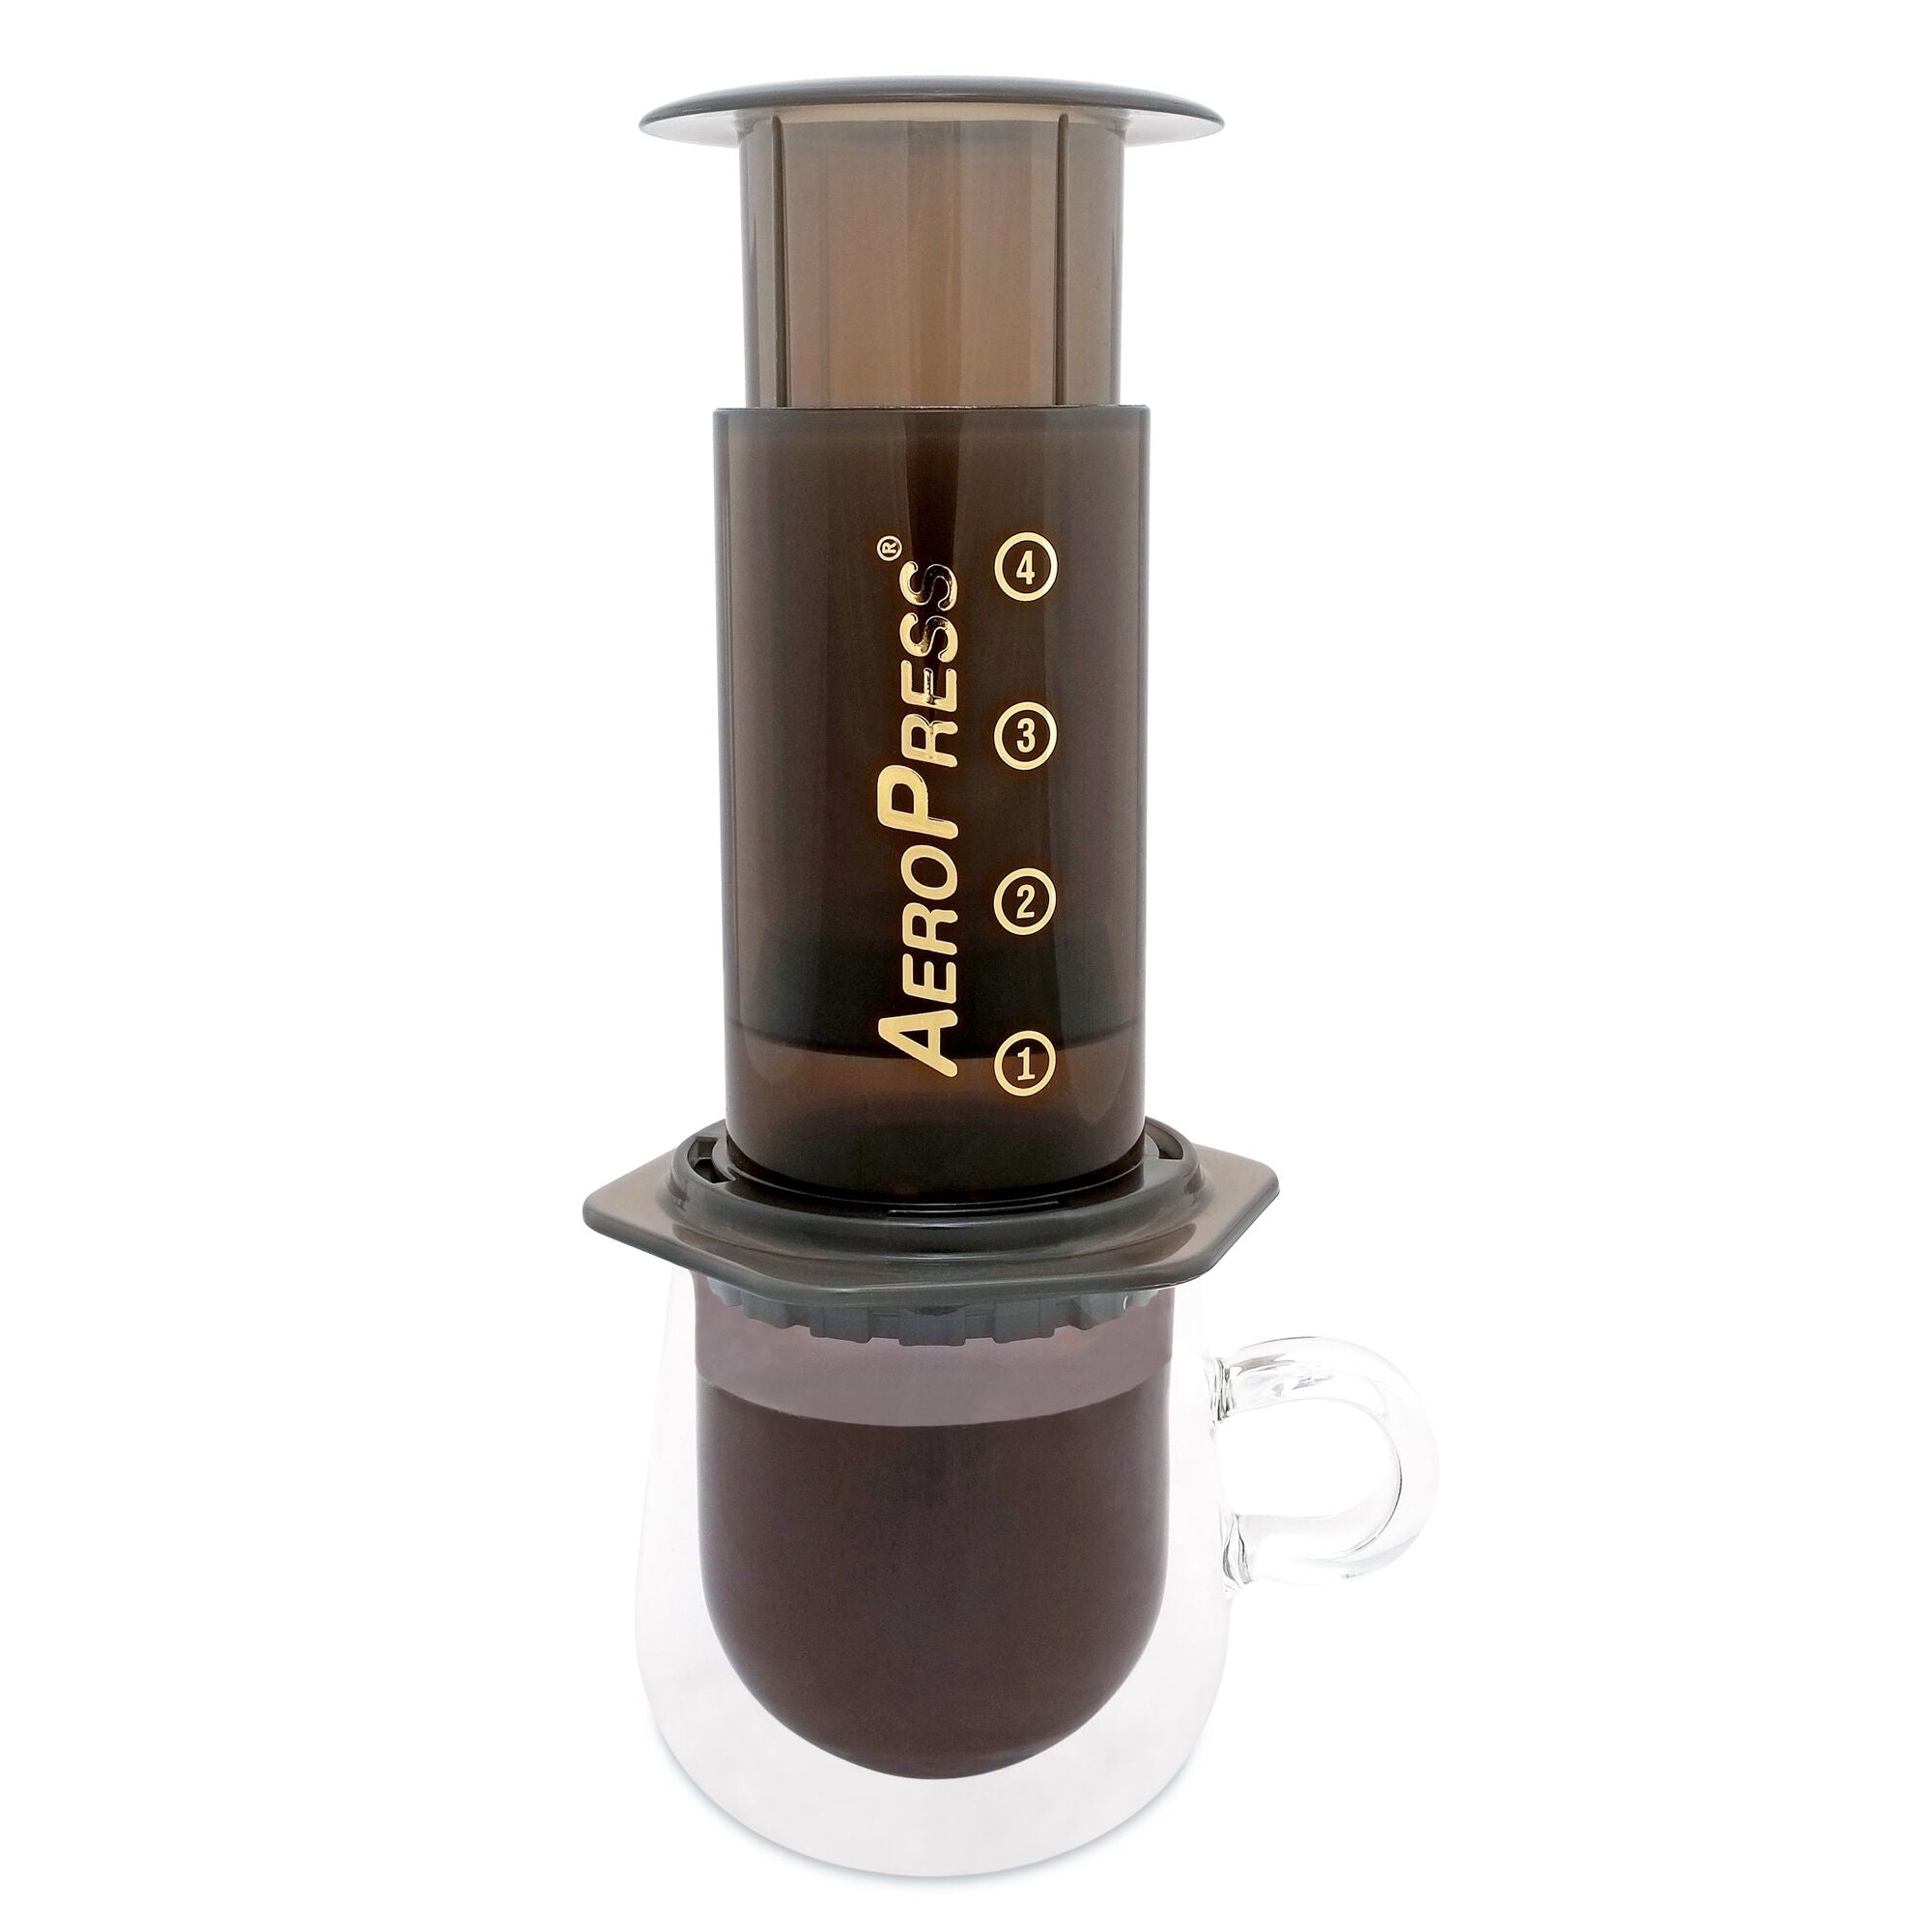 Aeropress "Aerobie" Coffee Maker